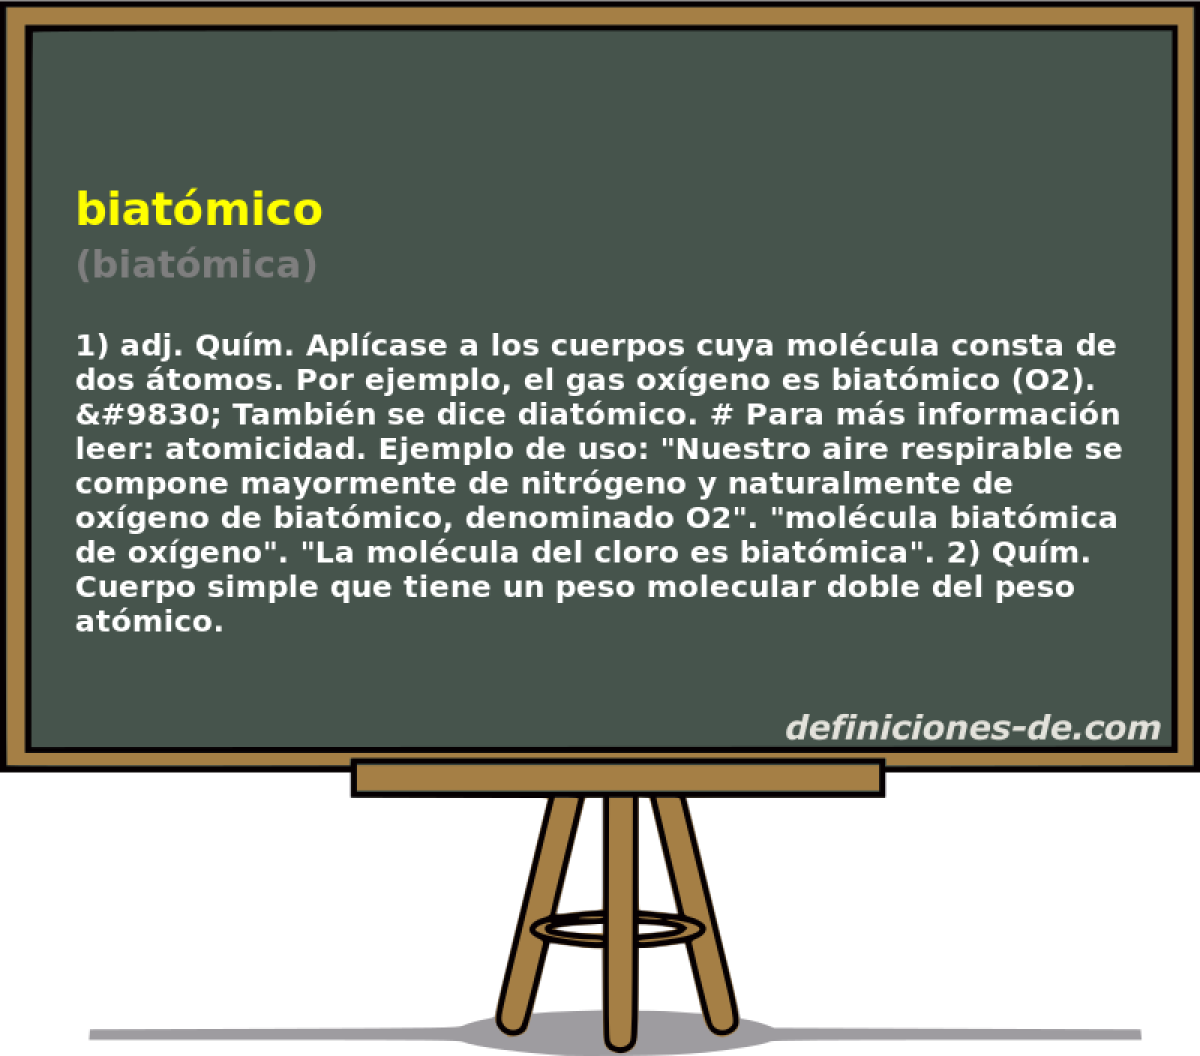 biatmico (biatmica)